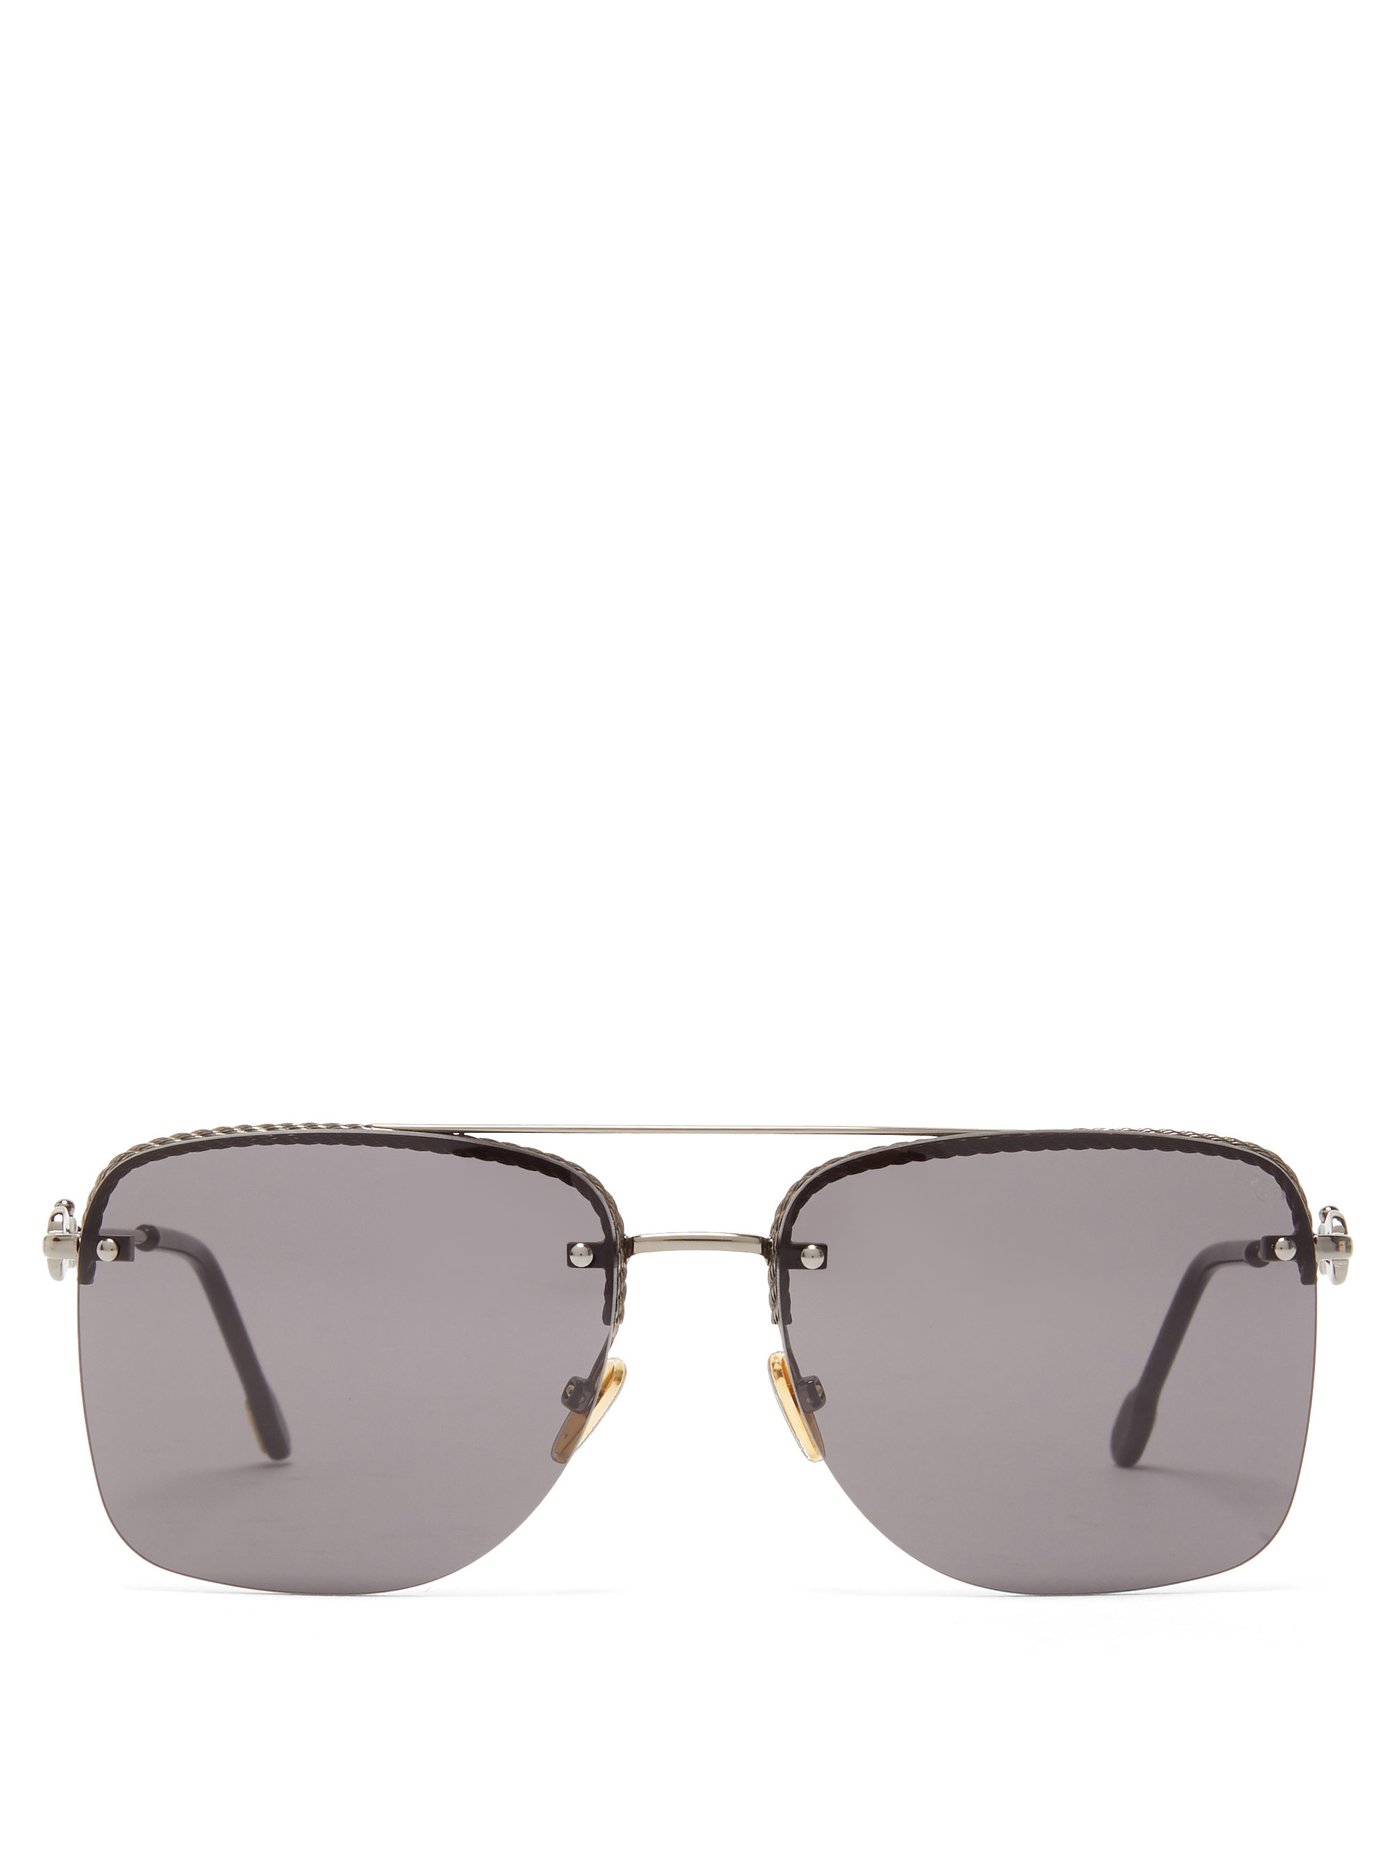 Fred Eyewear Force 10 Square Titanium Sunglasses In Grey | ModeSens